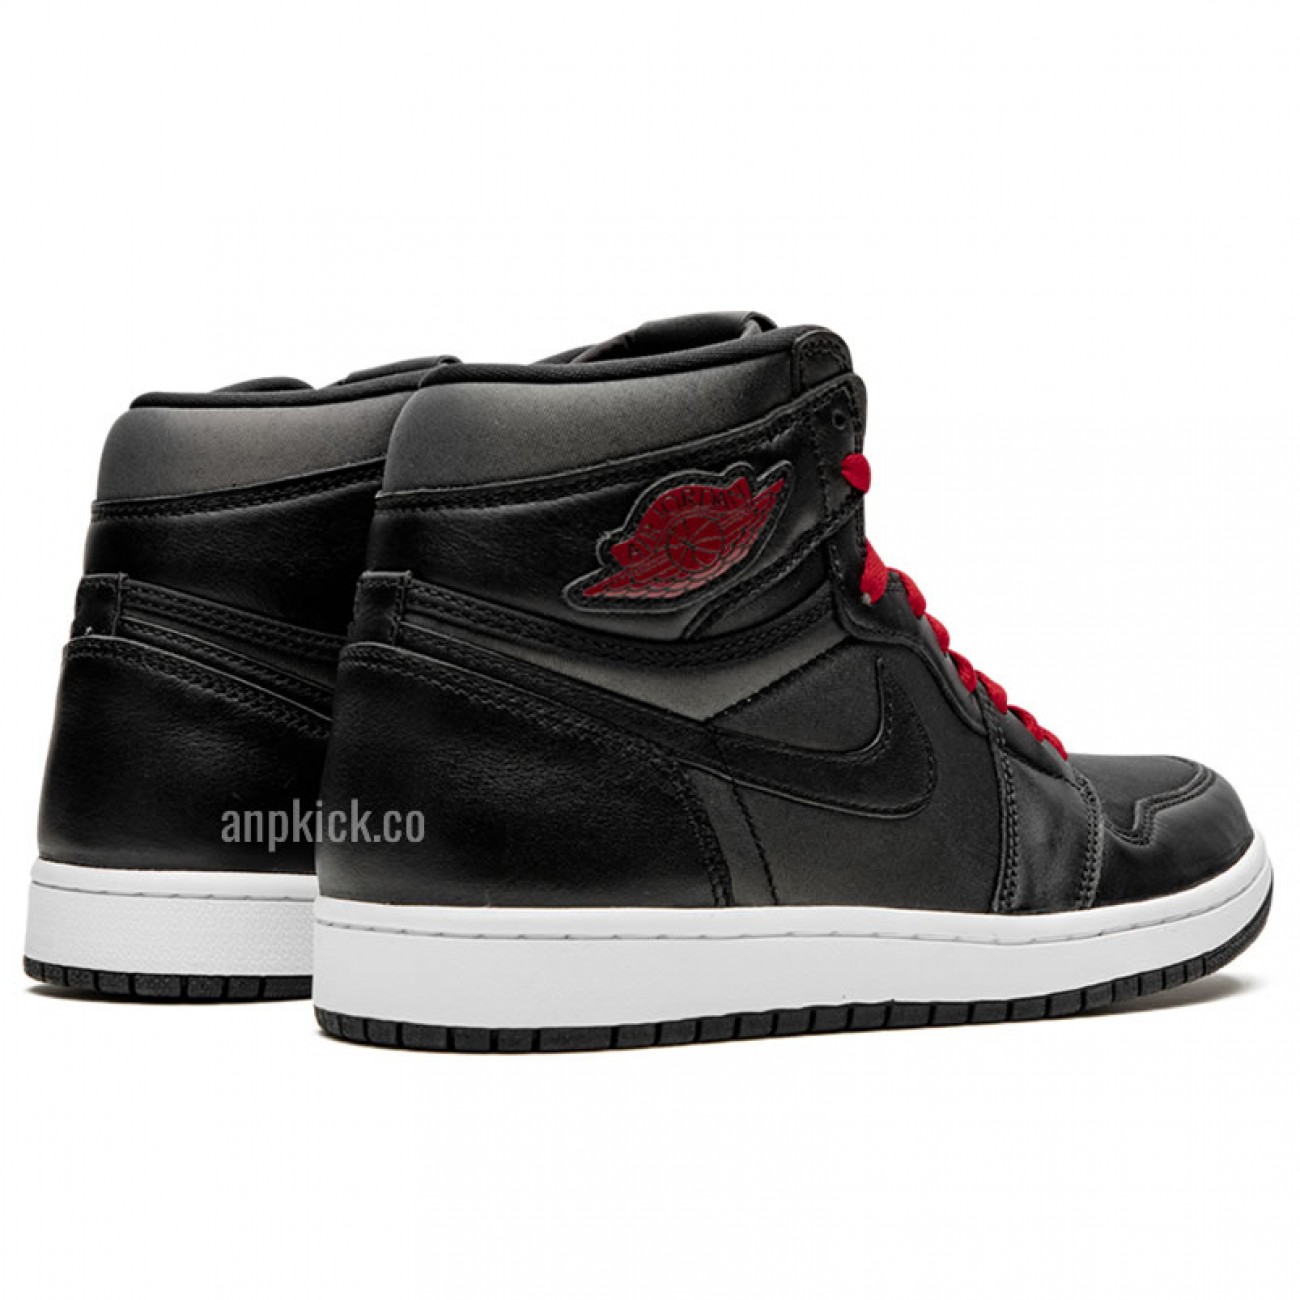 Air Jordan 1 Retro High OG "Black Satin/Gym Red" 555088-060 New Release